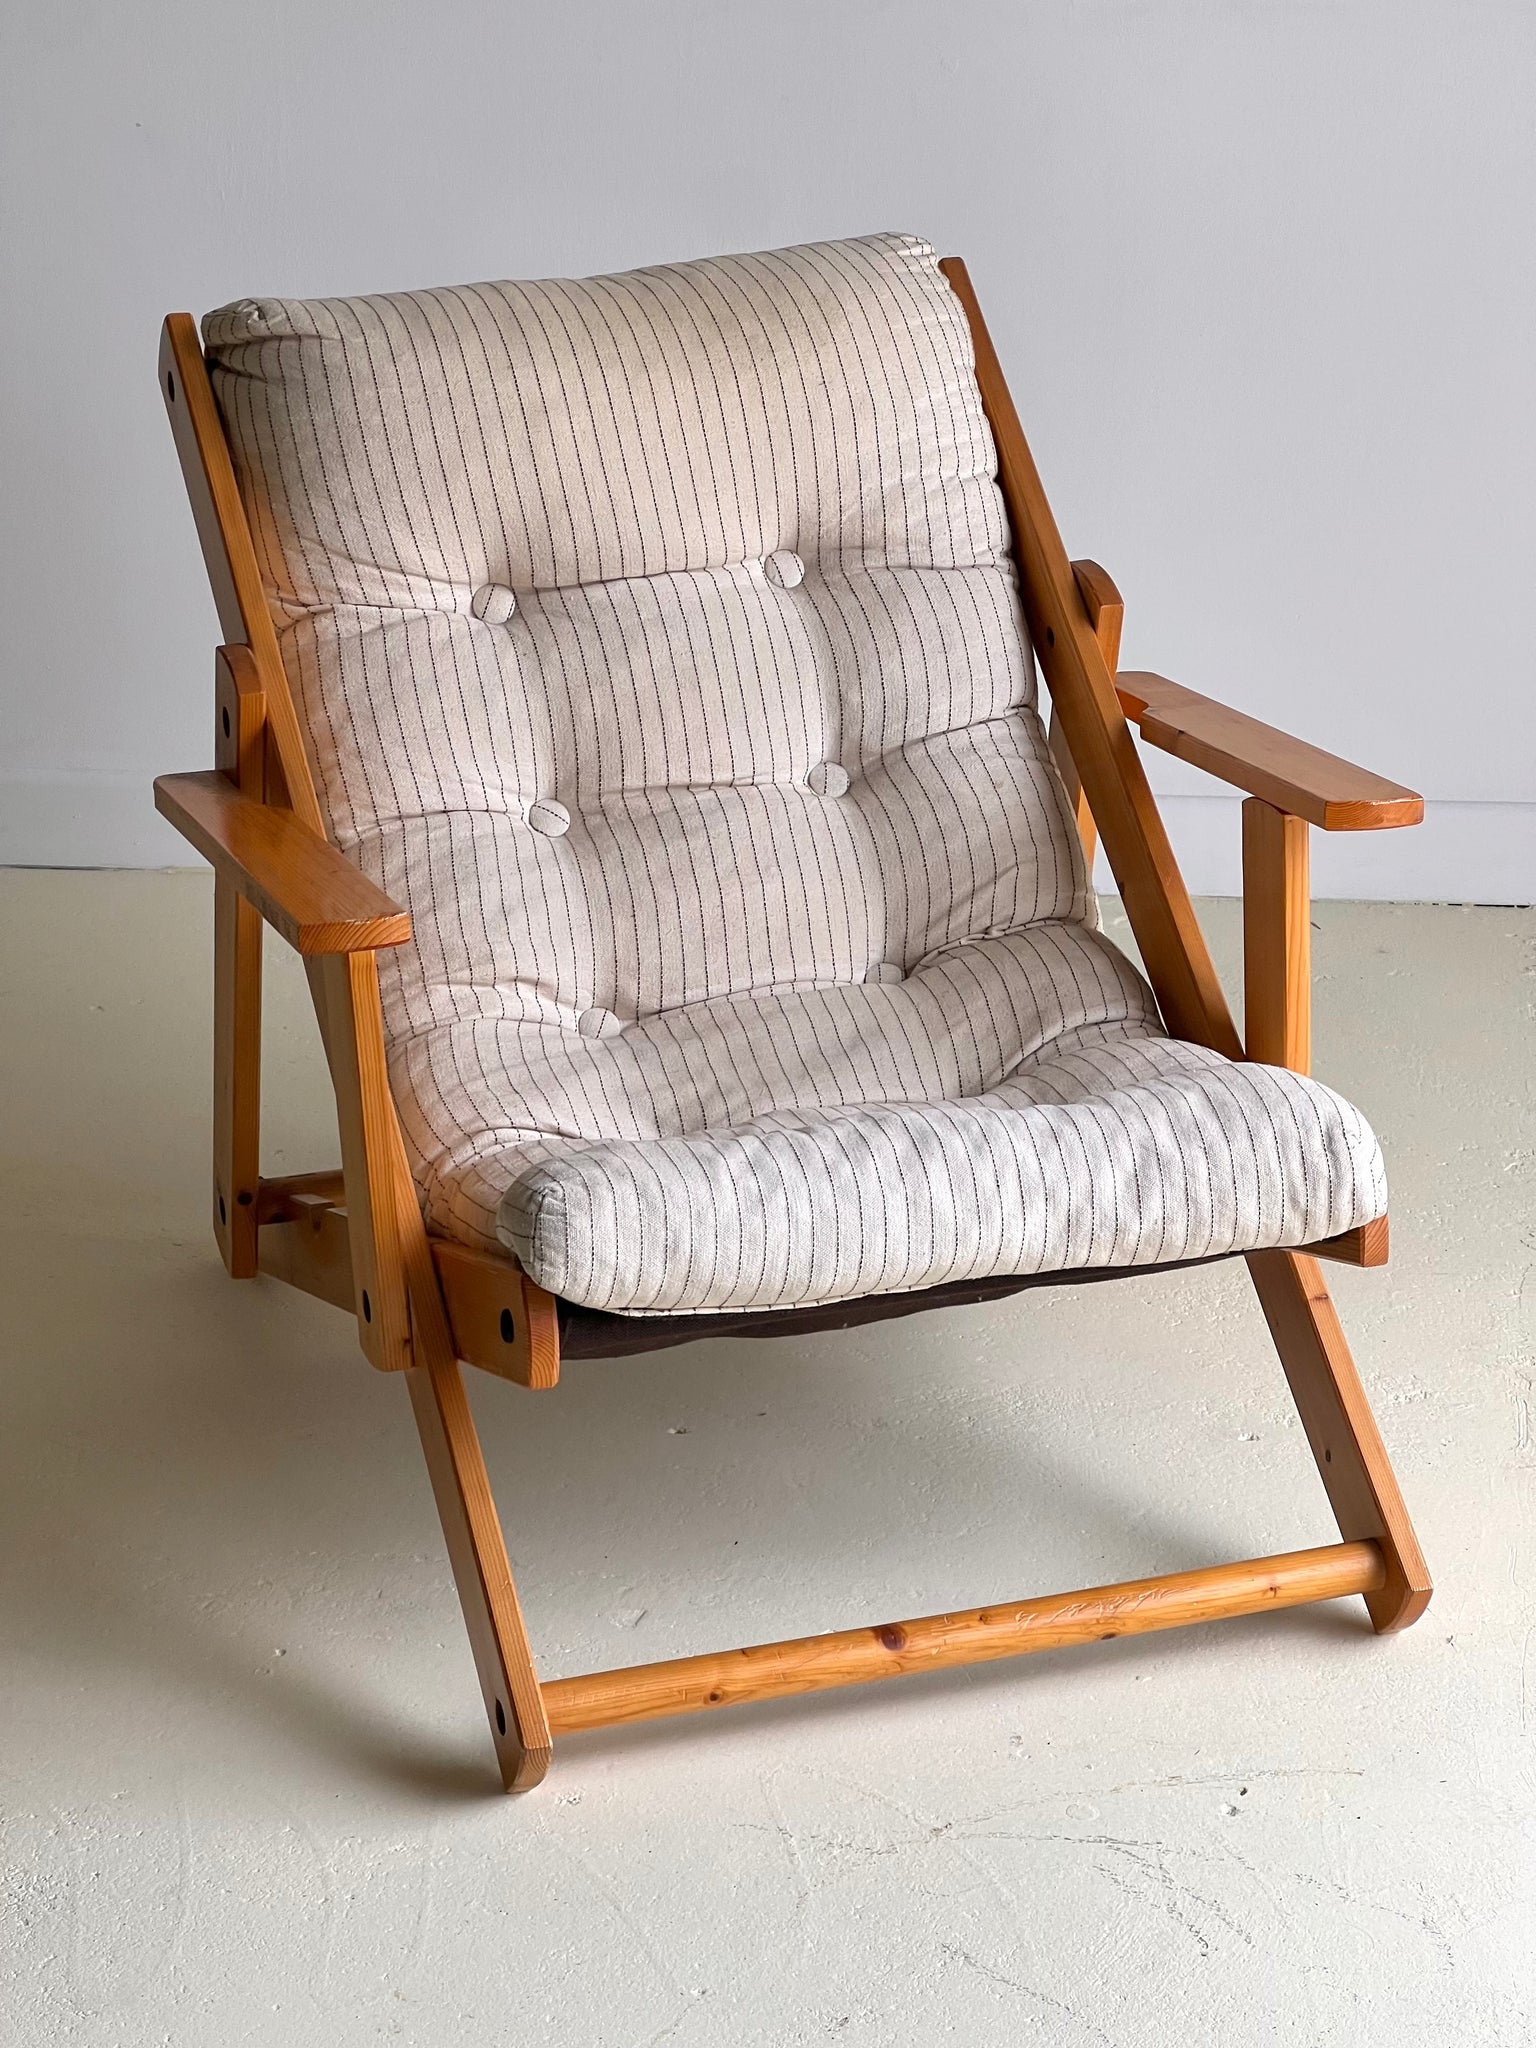 Swedish Pine Deck Chair